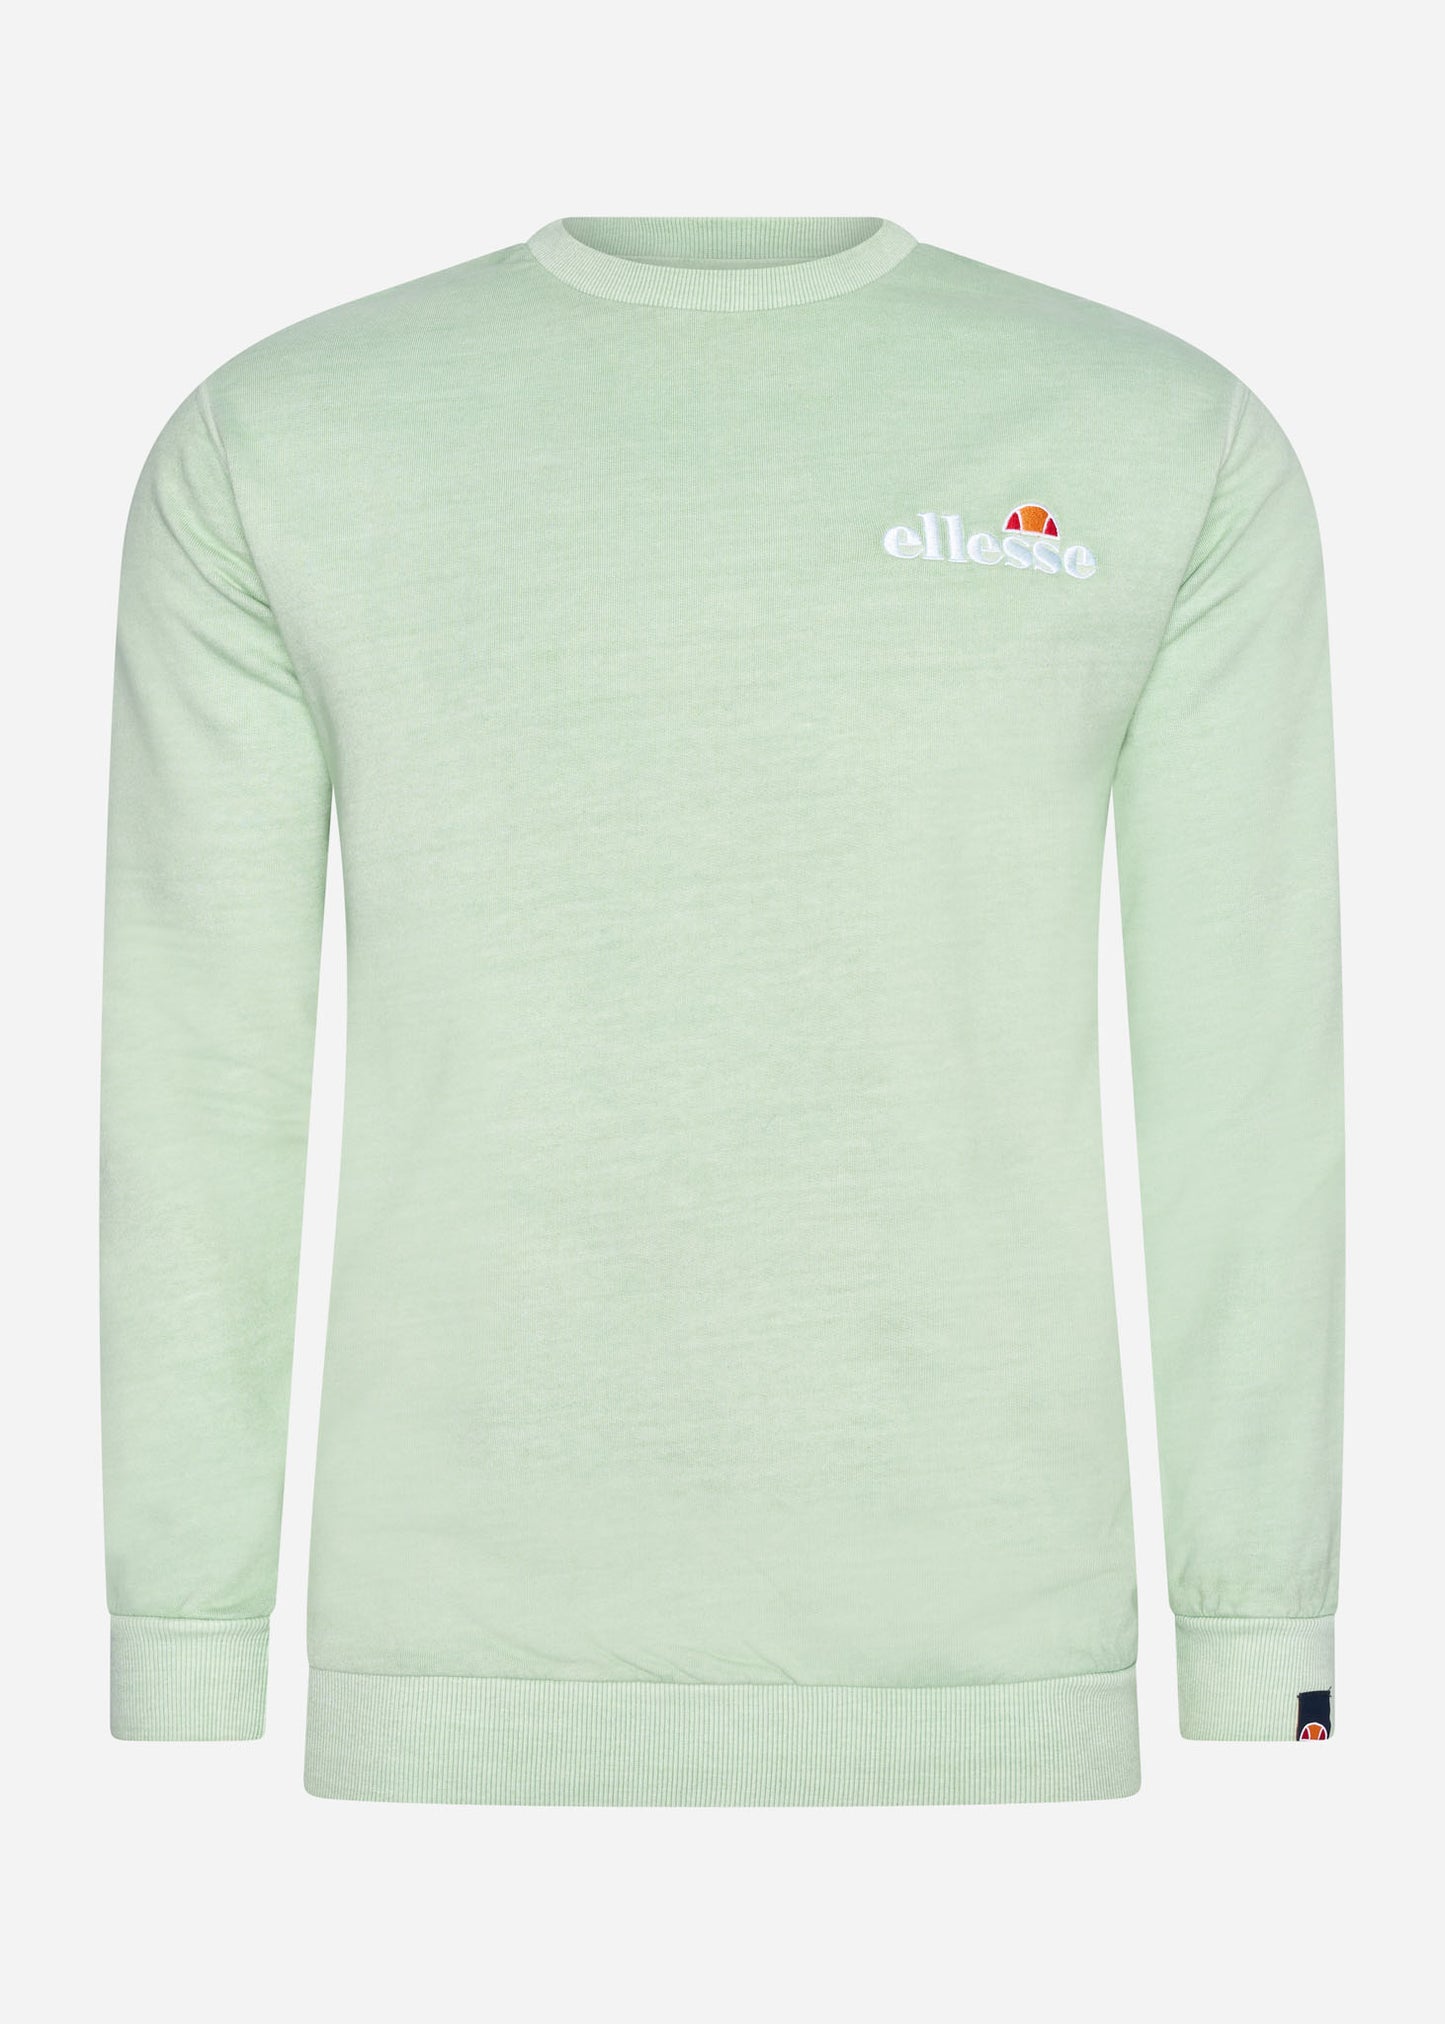 Calendula sweatshirt - green - Ellesse